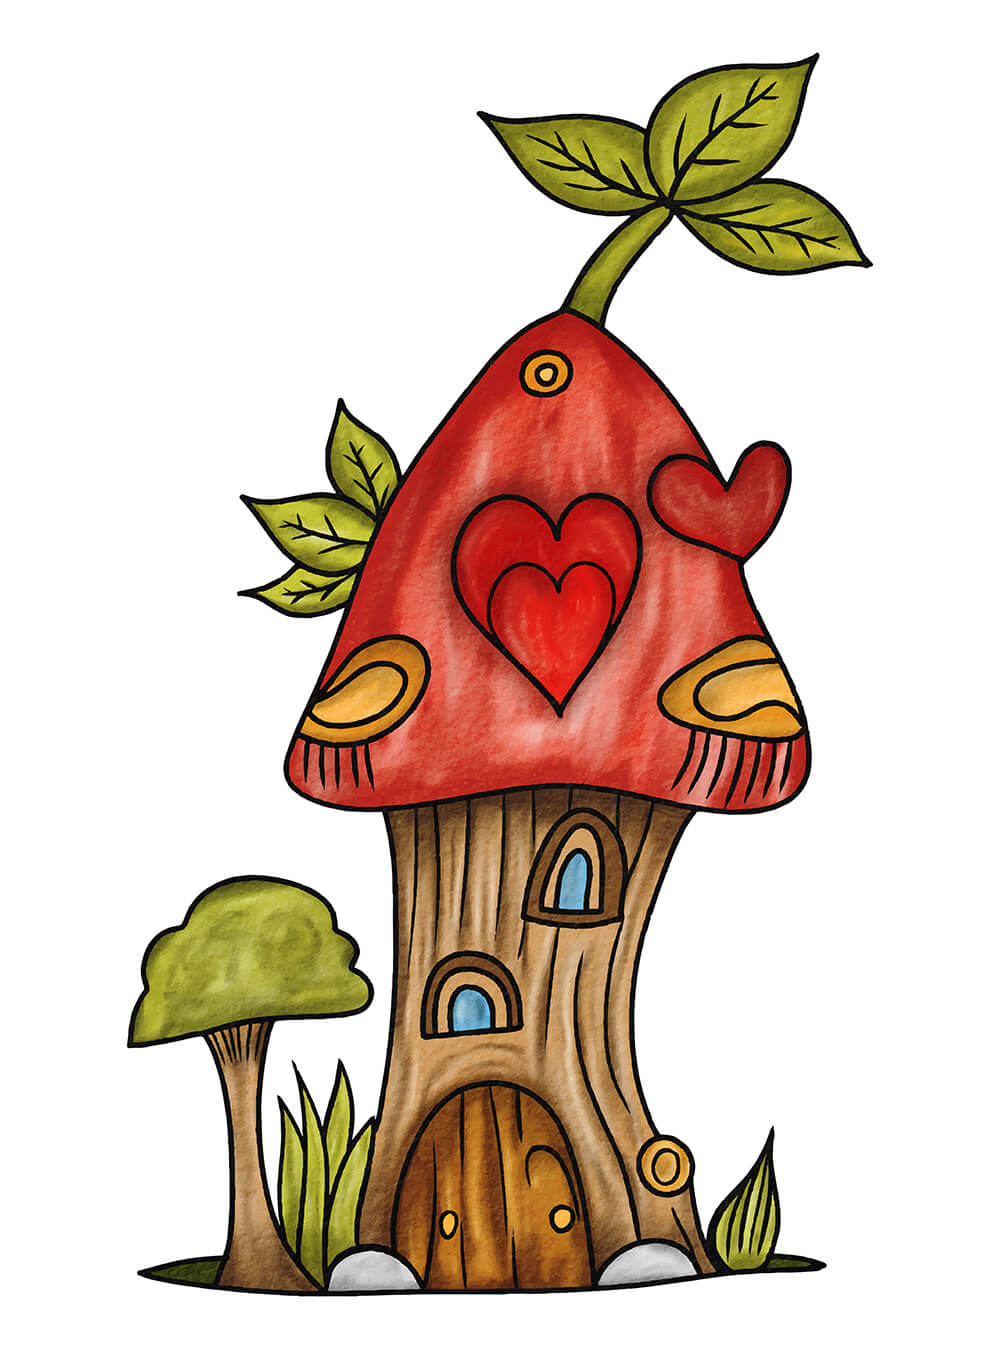 Hand Drawn Mushroom Watercolor Illustration